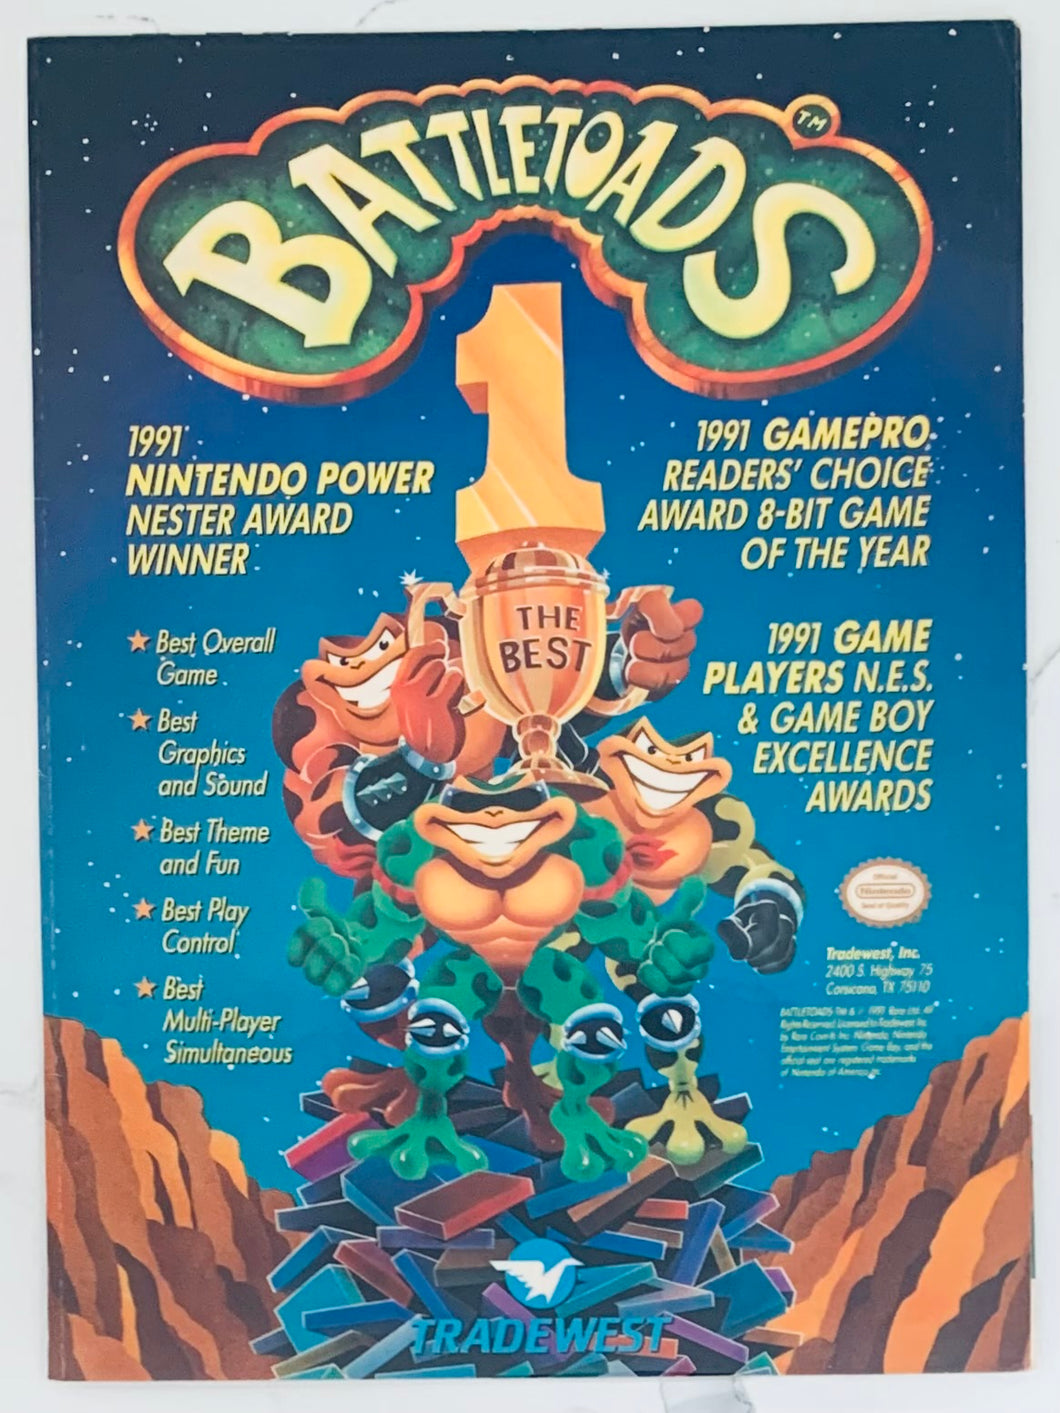 Battletoads - NES - Original Vintage Advertisement - Print Ads - Laminated A4 Poster